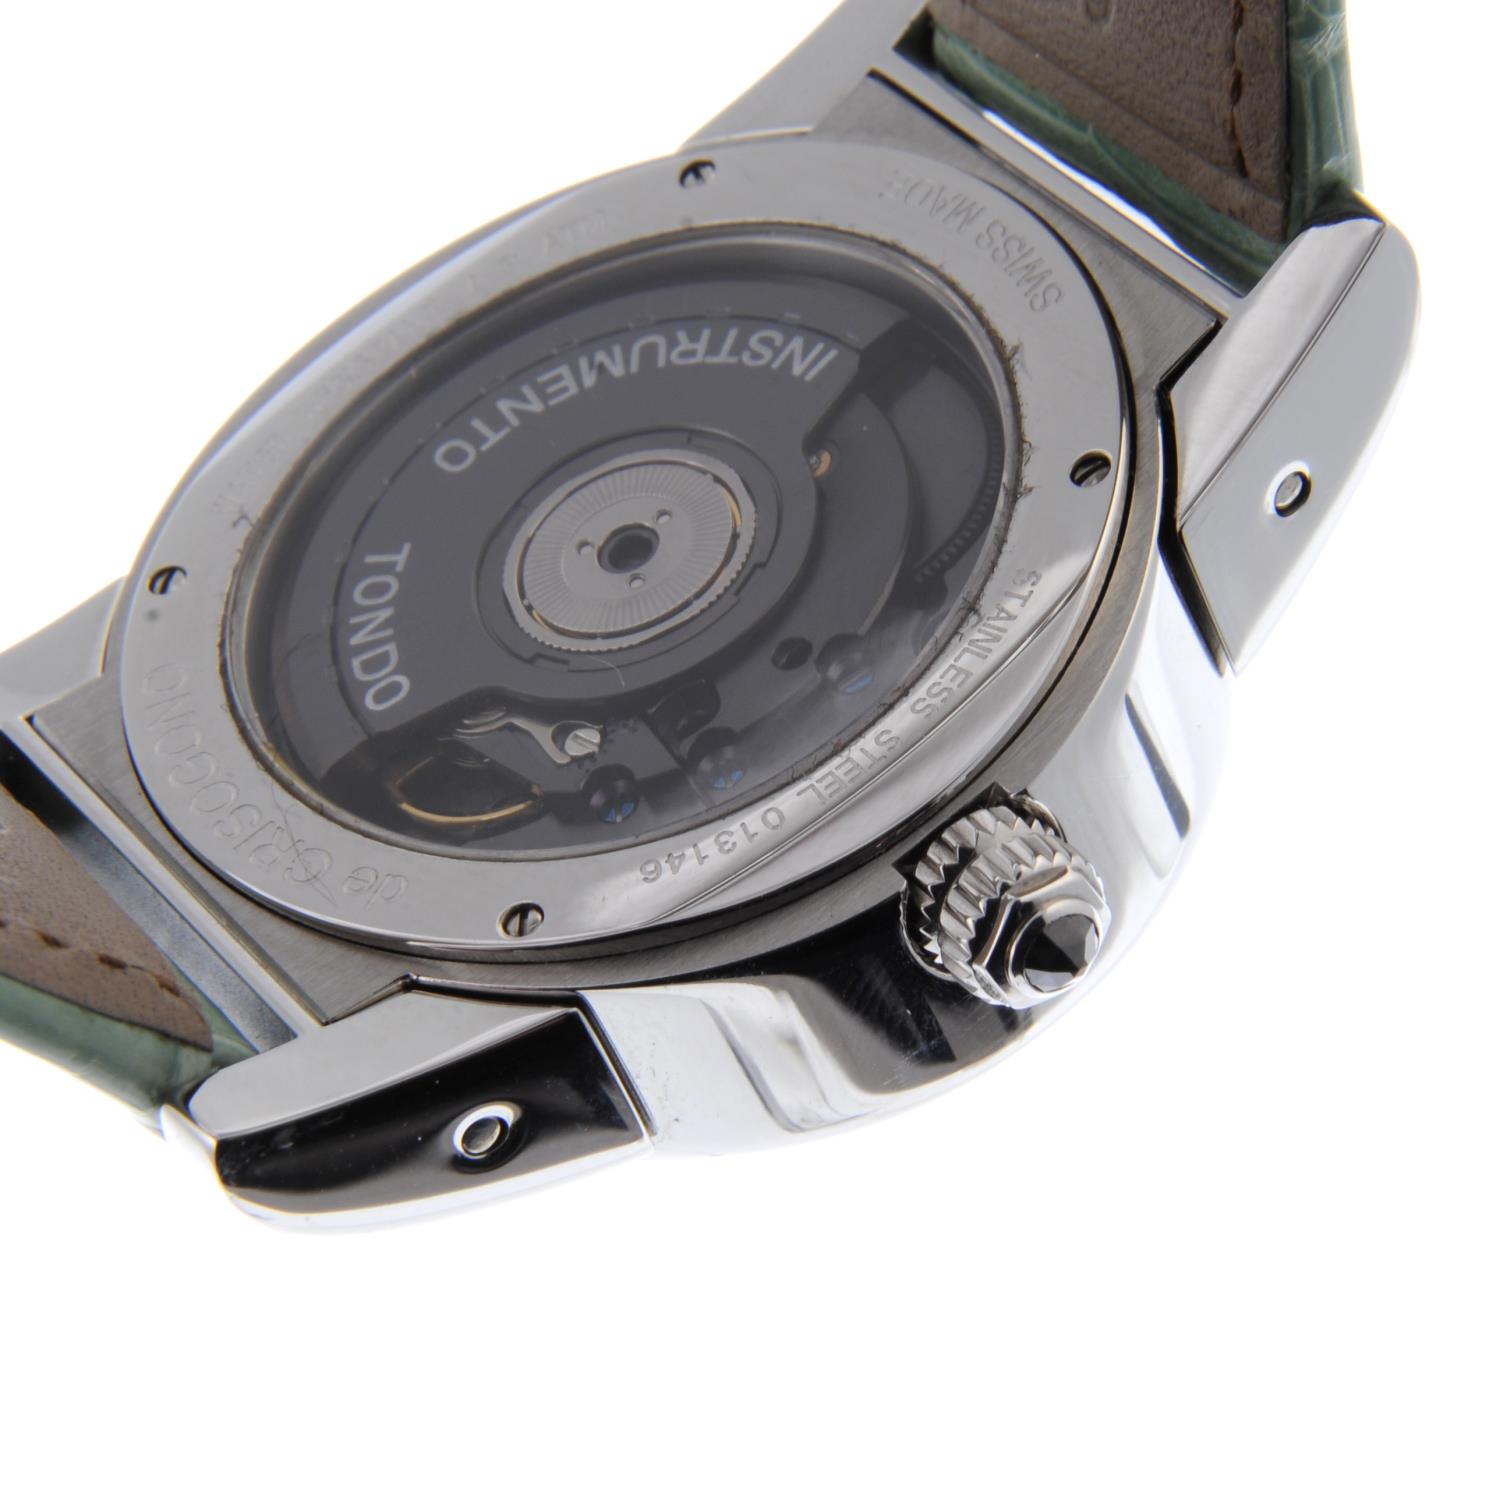 DE GRISOGONO - a mid-size Instrumento Tondo GMT wrist watch. - Image 2 of 3